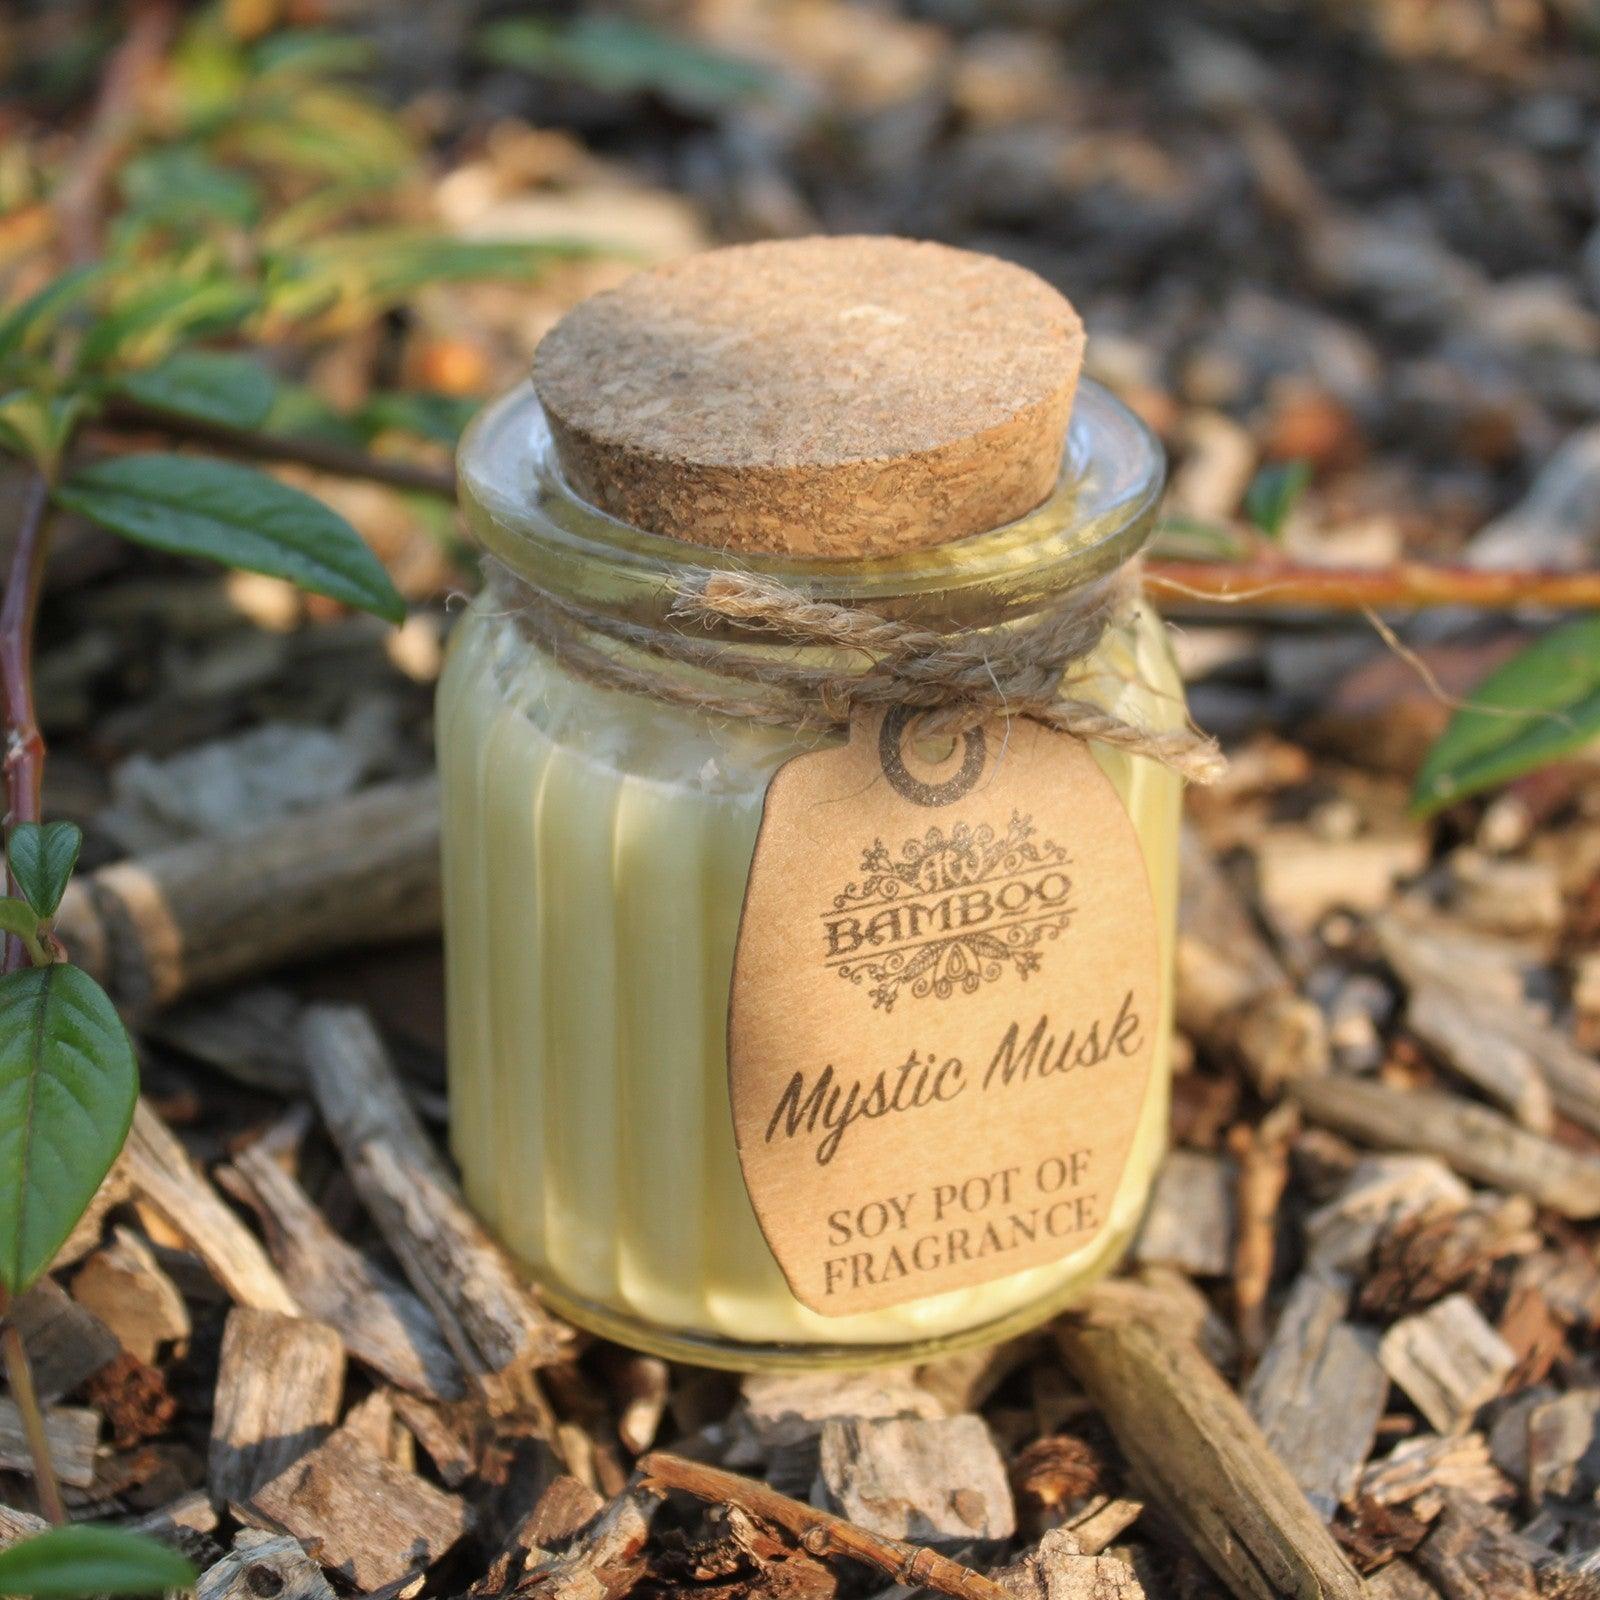 Mystic Musk Soy Pot of Fragrance Candles - DuvetDay.co.uk